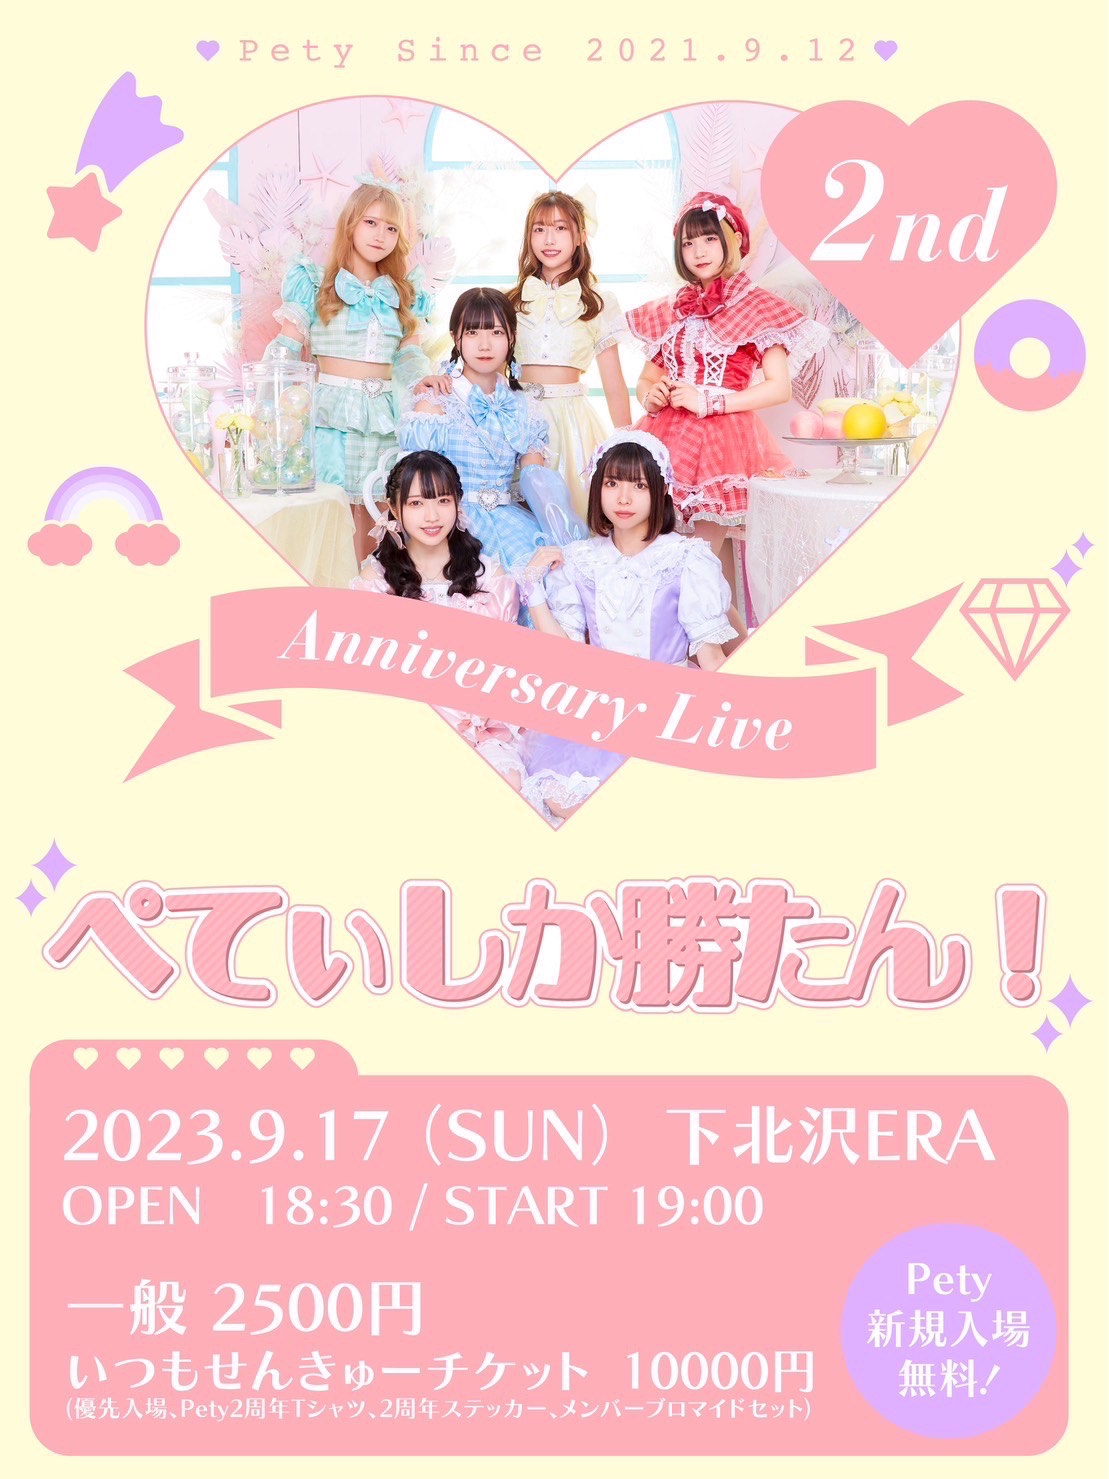 Pety 2nd Anniversary Live 『ぺてぃしか勝たん』